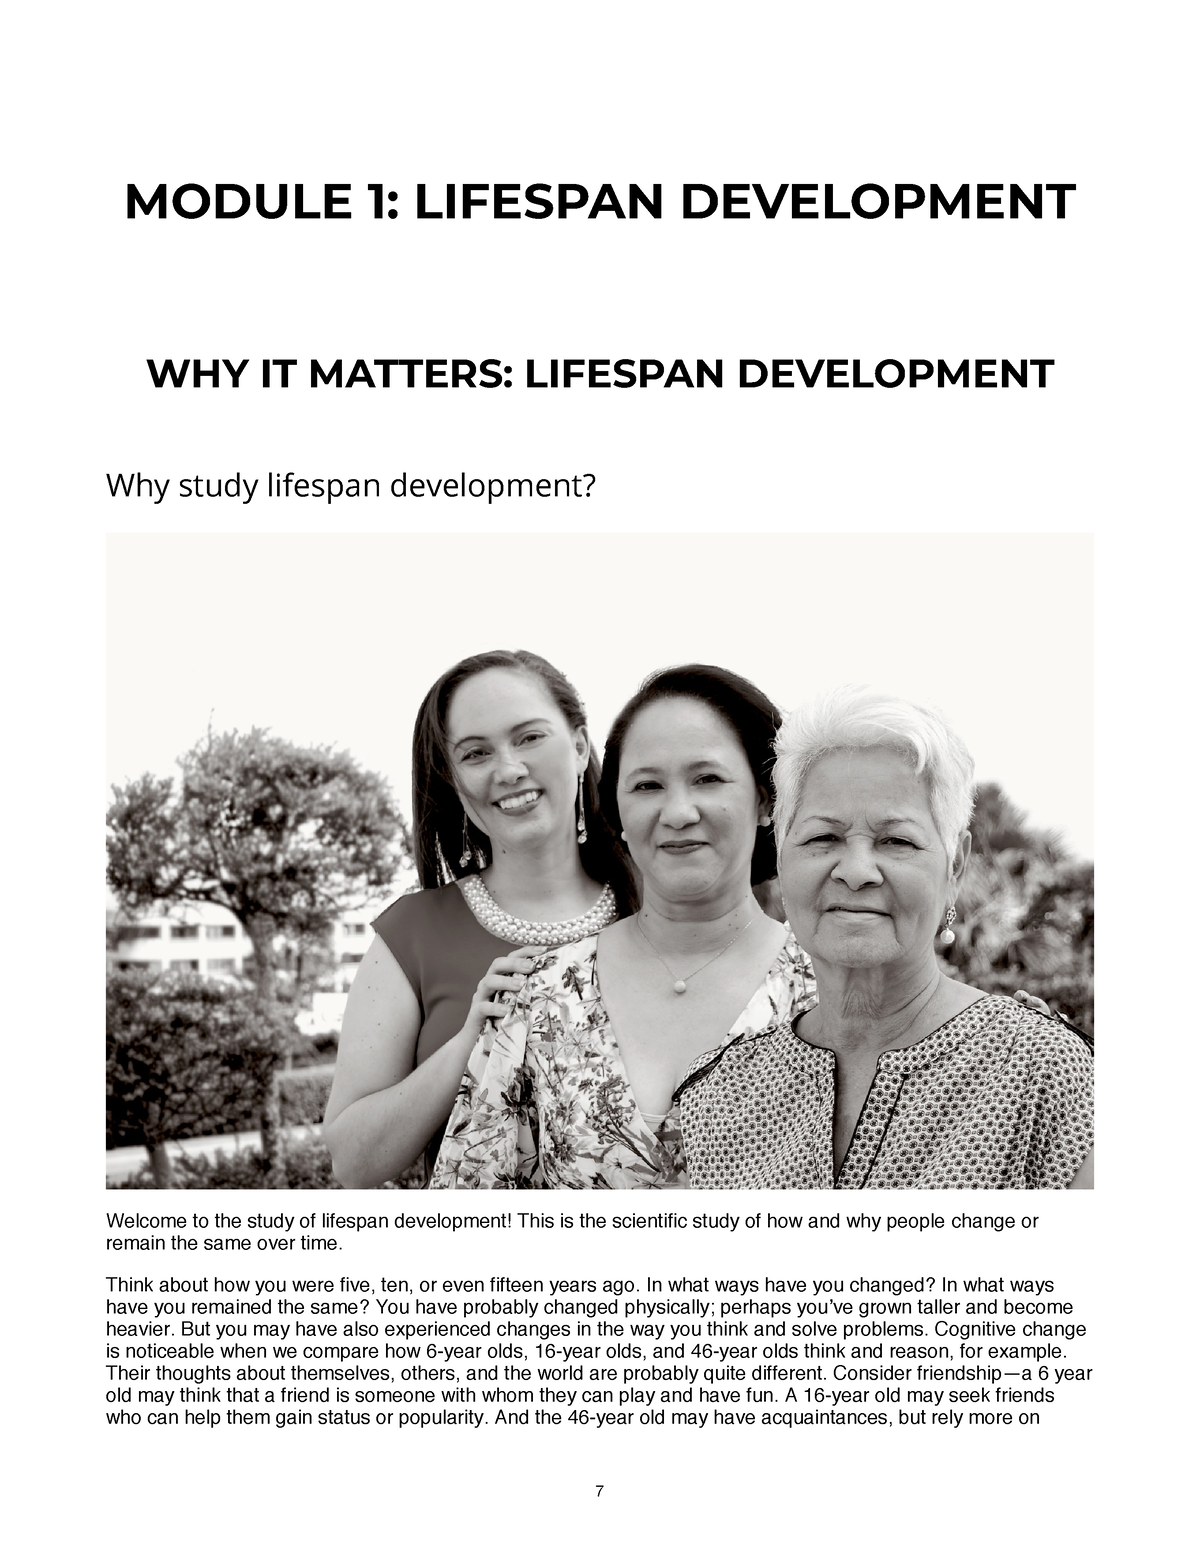 lifespan development case study